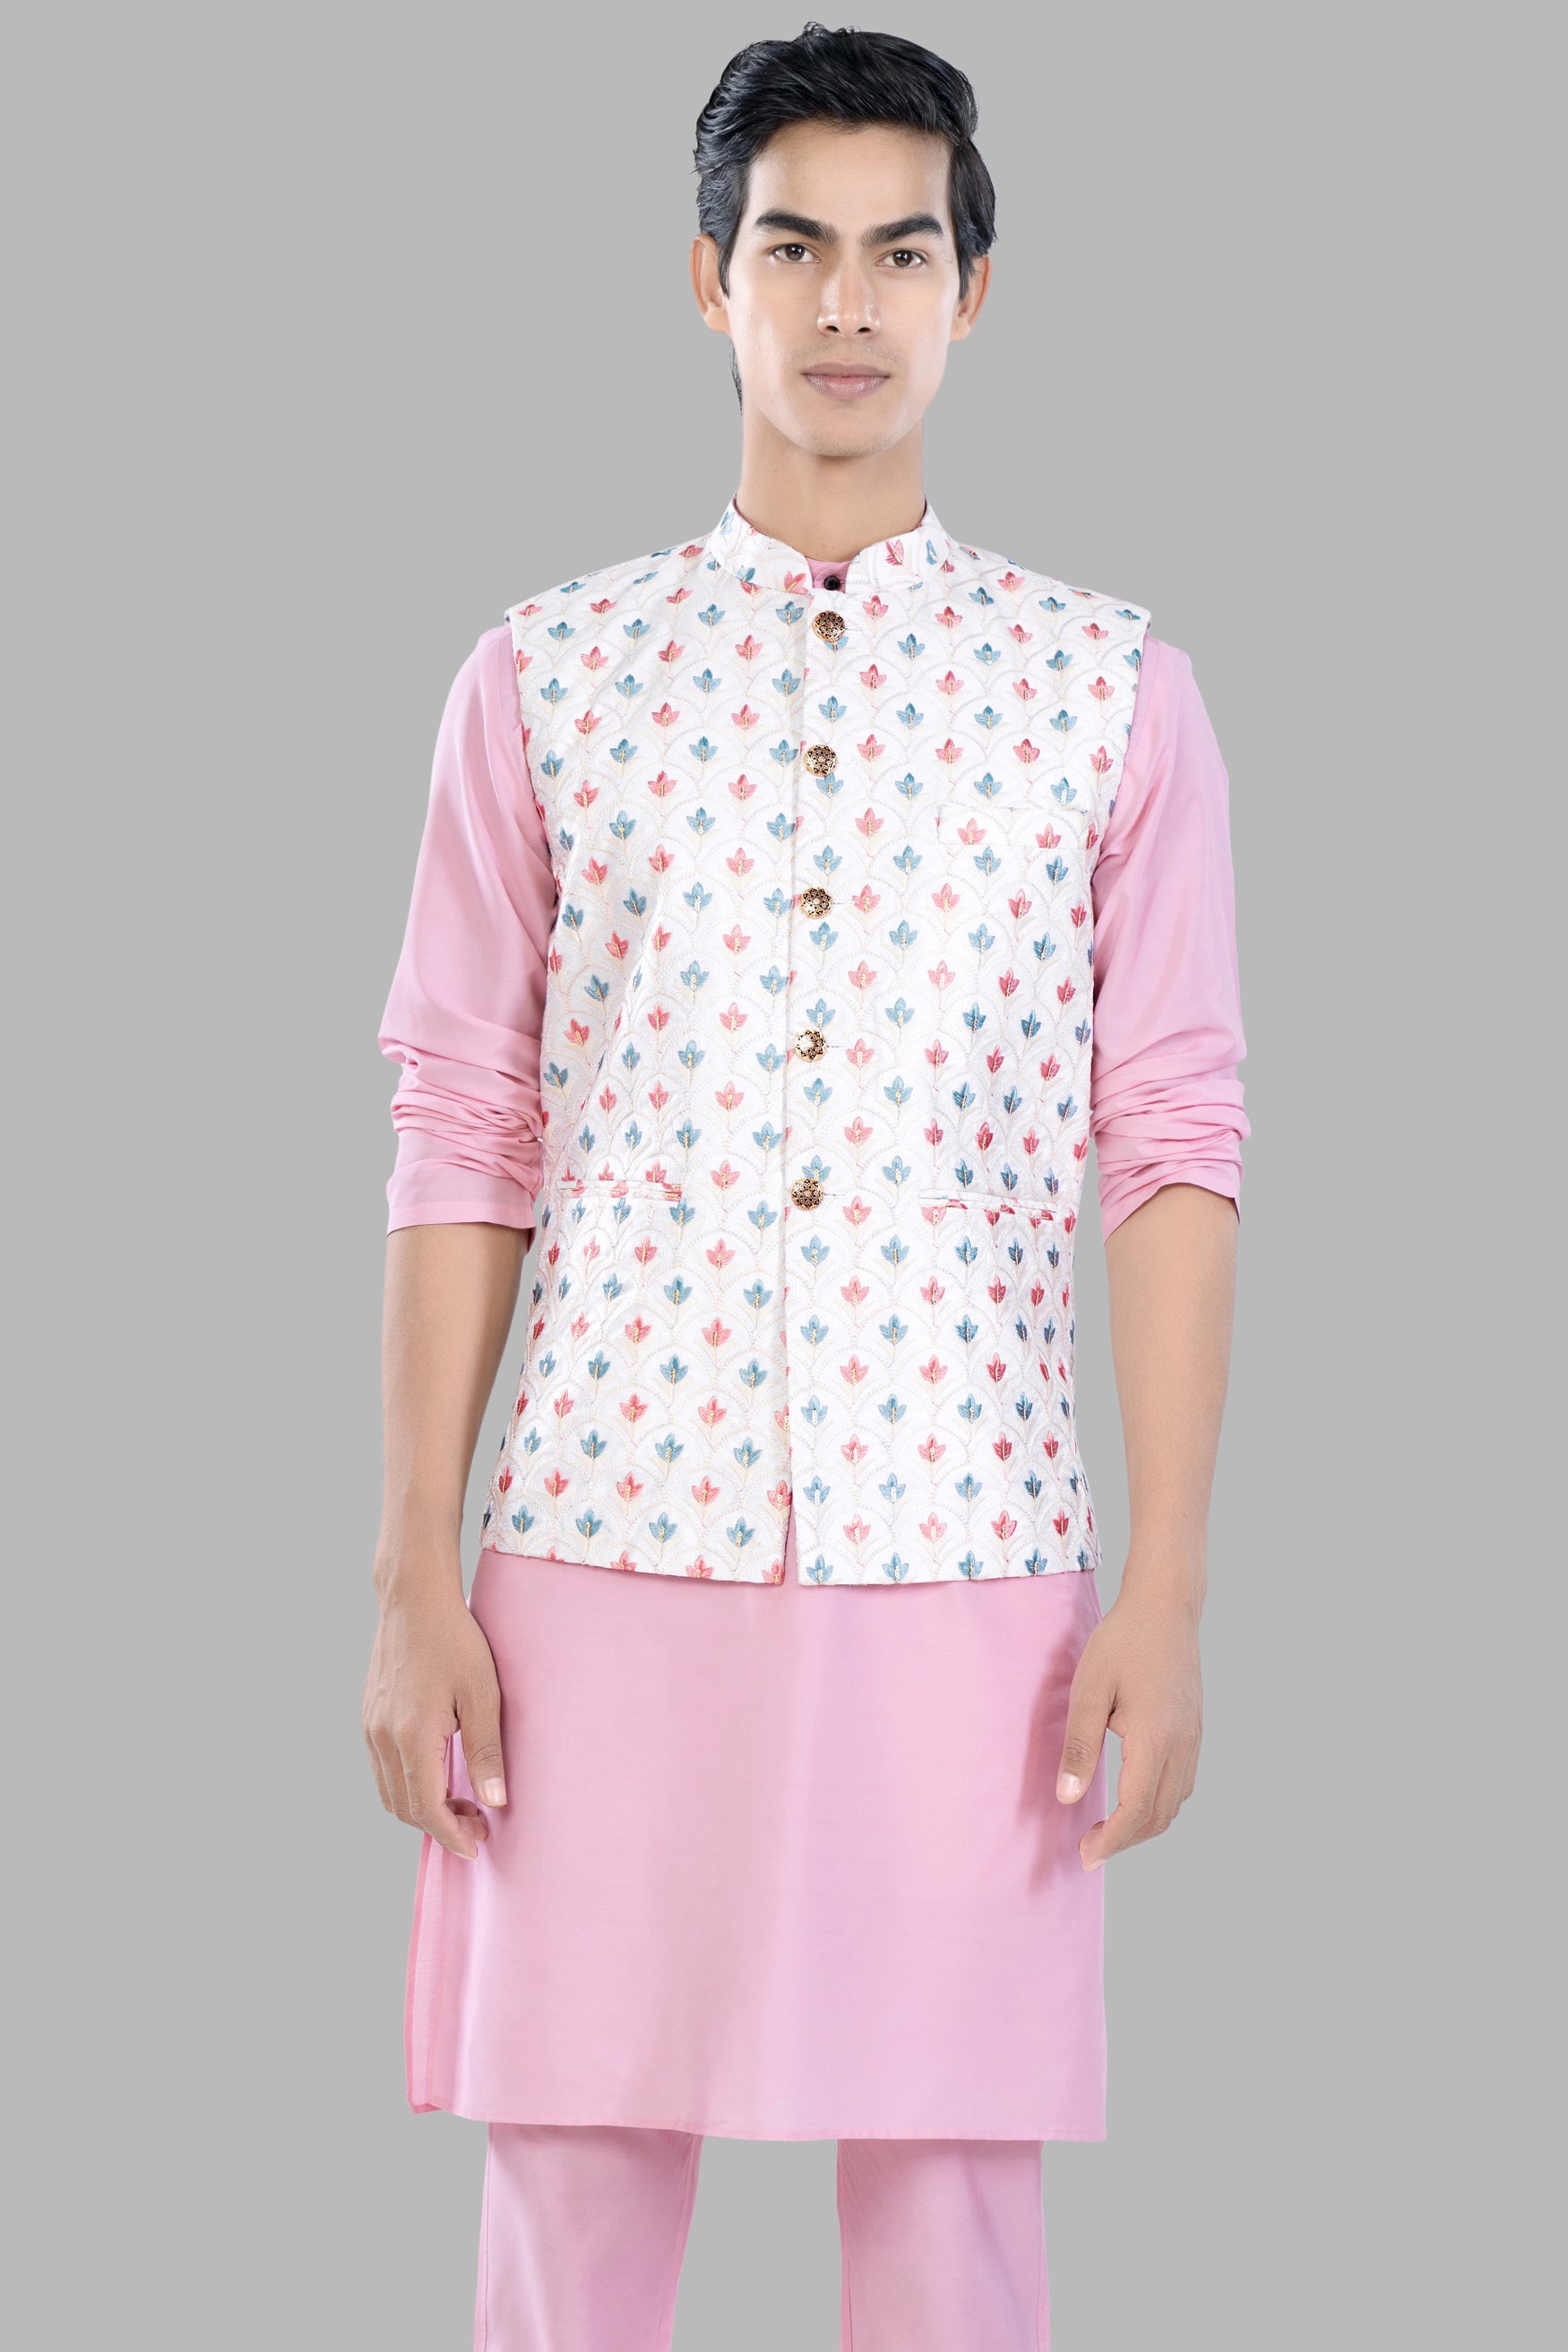 Azalea Pink Kurta Set with Bright White and Carnation Pink Leaves Thread Embroidered Designer Nehru Jacket KPNJ035-44,  KPNJ035-46,  KPNJ035-48,  KPNJ035-50,  KPNJ035-52,  KPNJ035-54,  KPNJ035-56,  KPNJ035-58,  KPNJ035-60